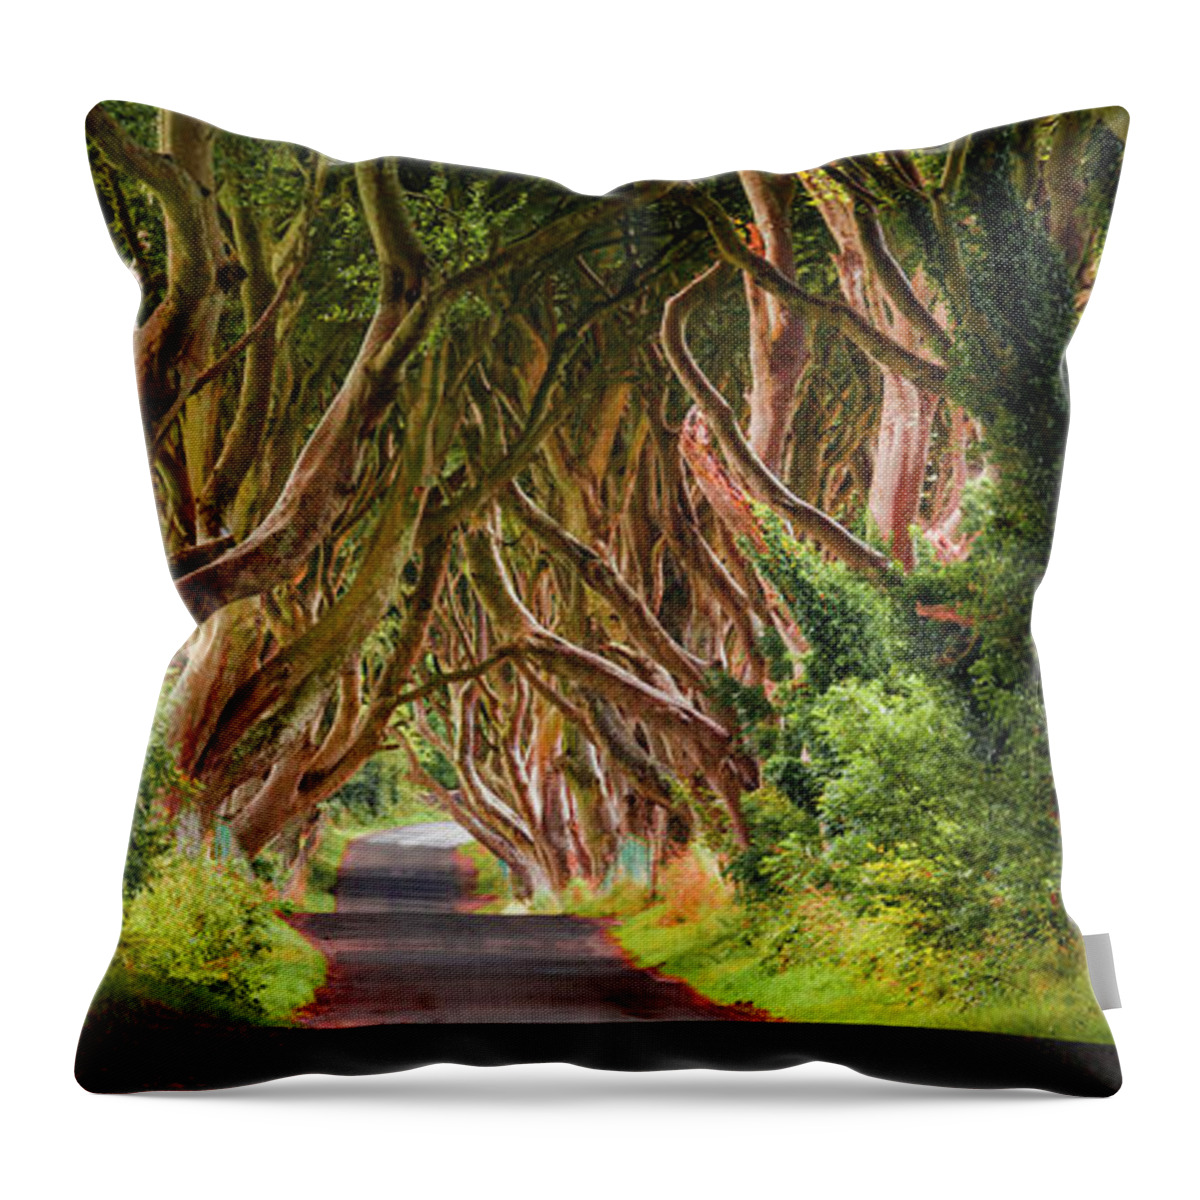 Estock Throw Pillow featuring the digital art Road Under Trees #1 by Olimpio Fantuz